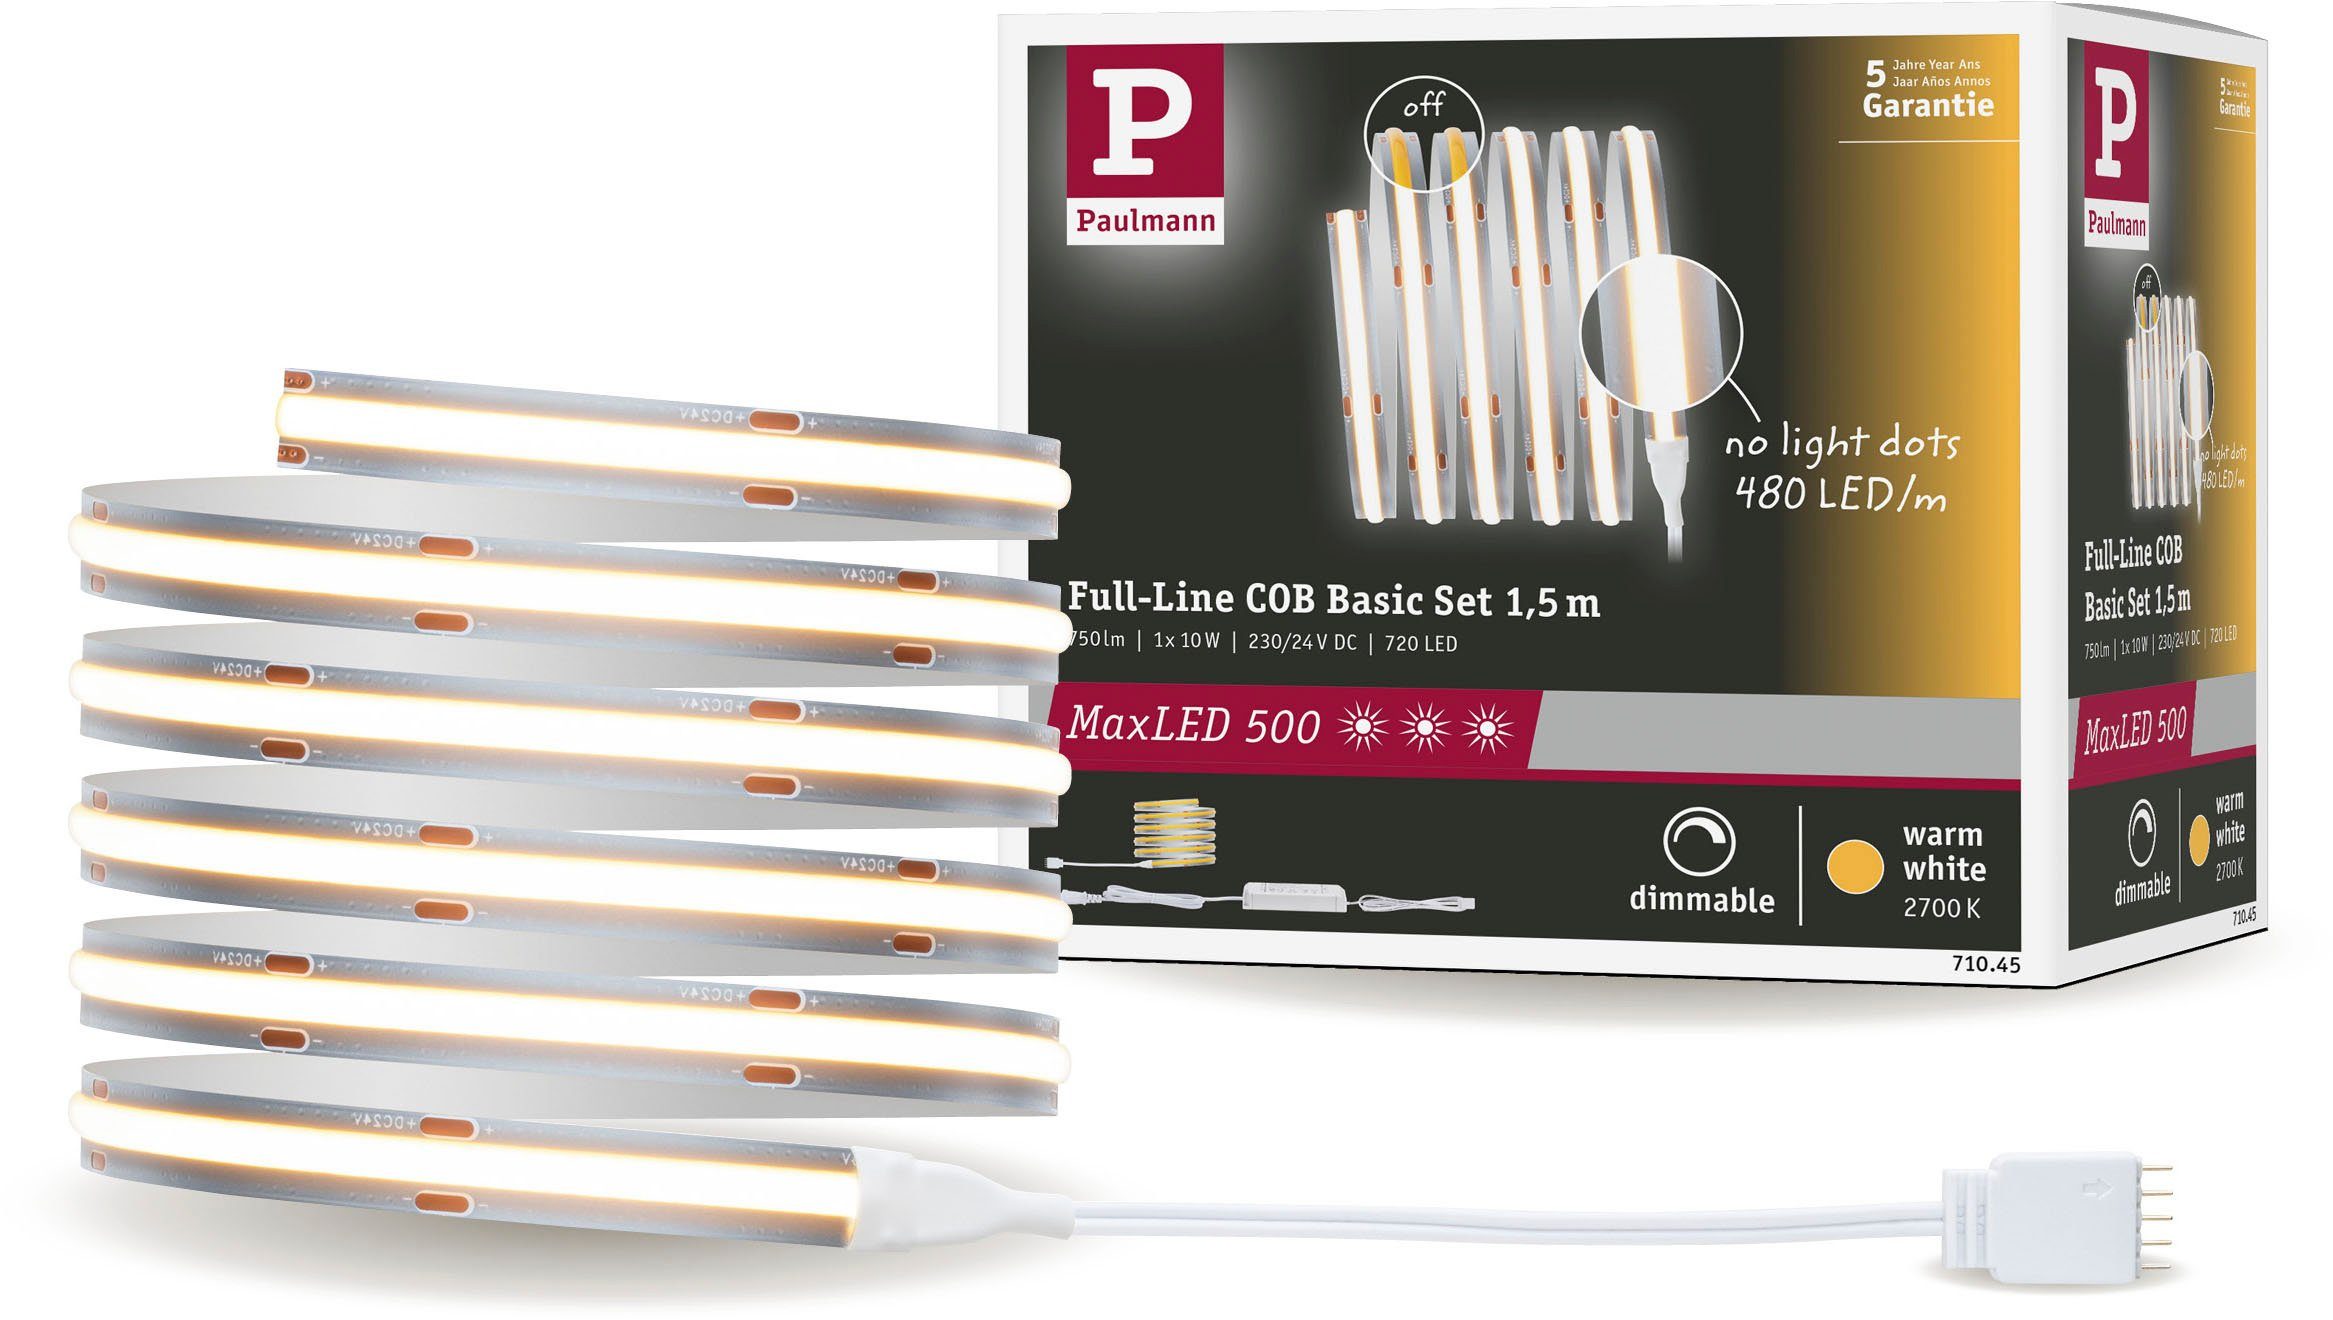 Paulmann LED-Streifen MaxLED 500 Full-Line COB Basisset 1,5m, warmweiß10W 750lm 480LED 2700K, 1-flammig, Basisset | LED-Stripes